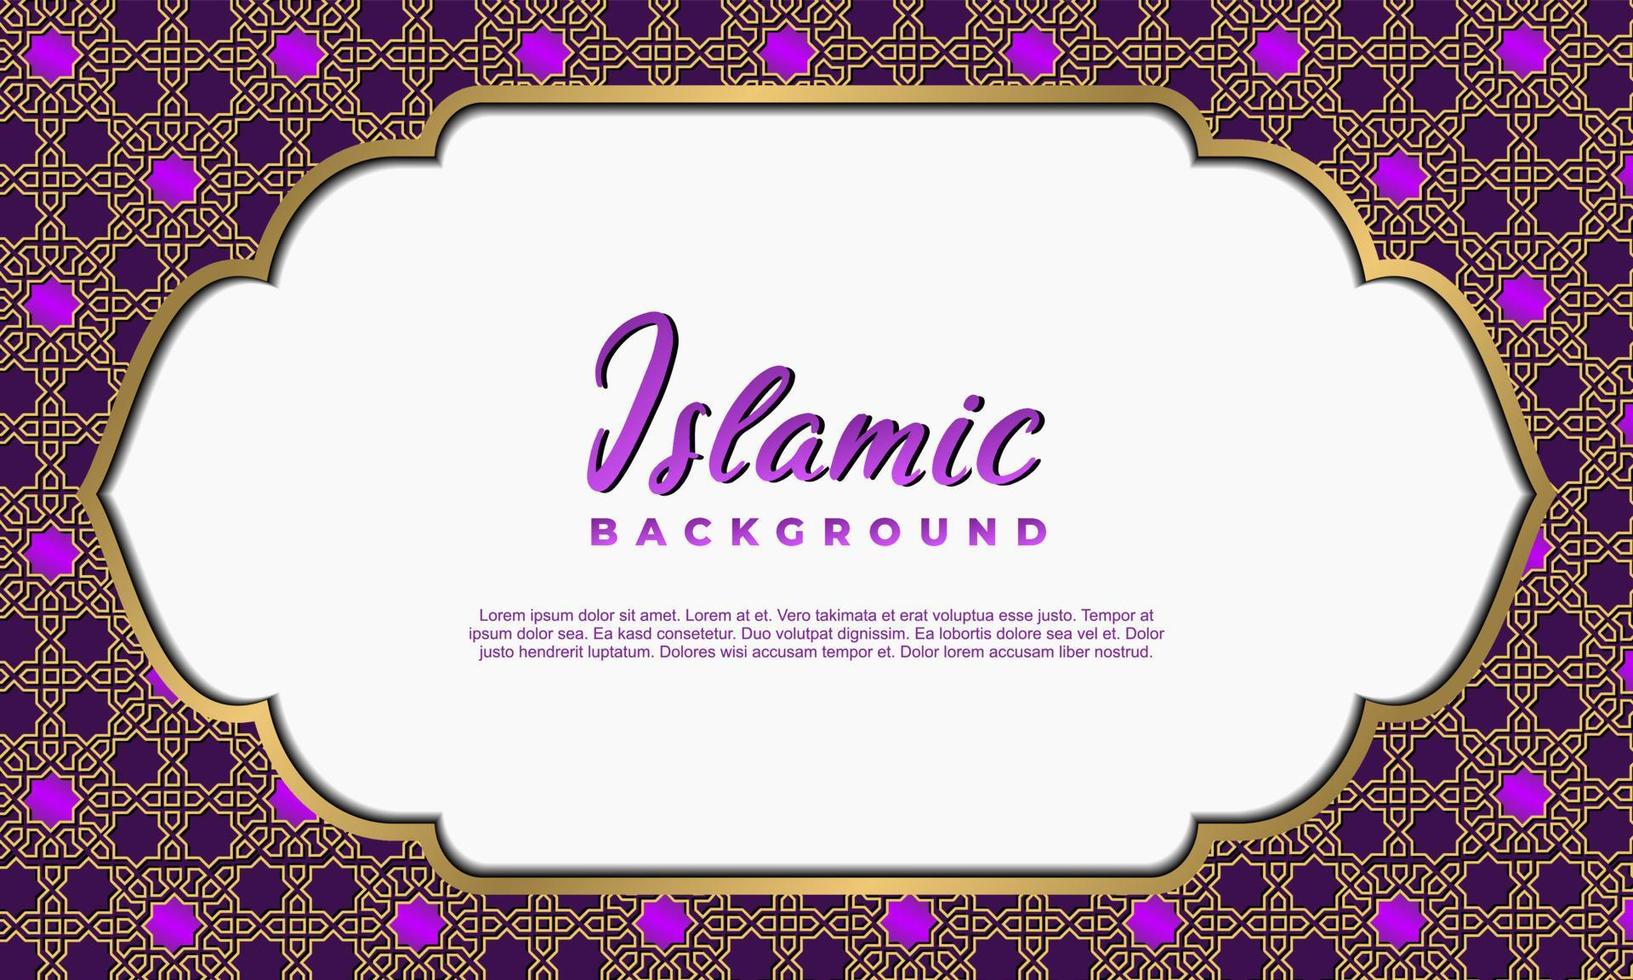 Arabic elegant luxury ornamental islamic background with islamic pattern decorative ornament vector